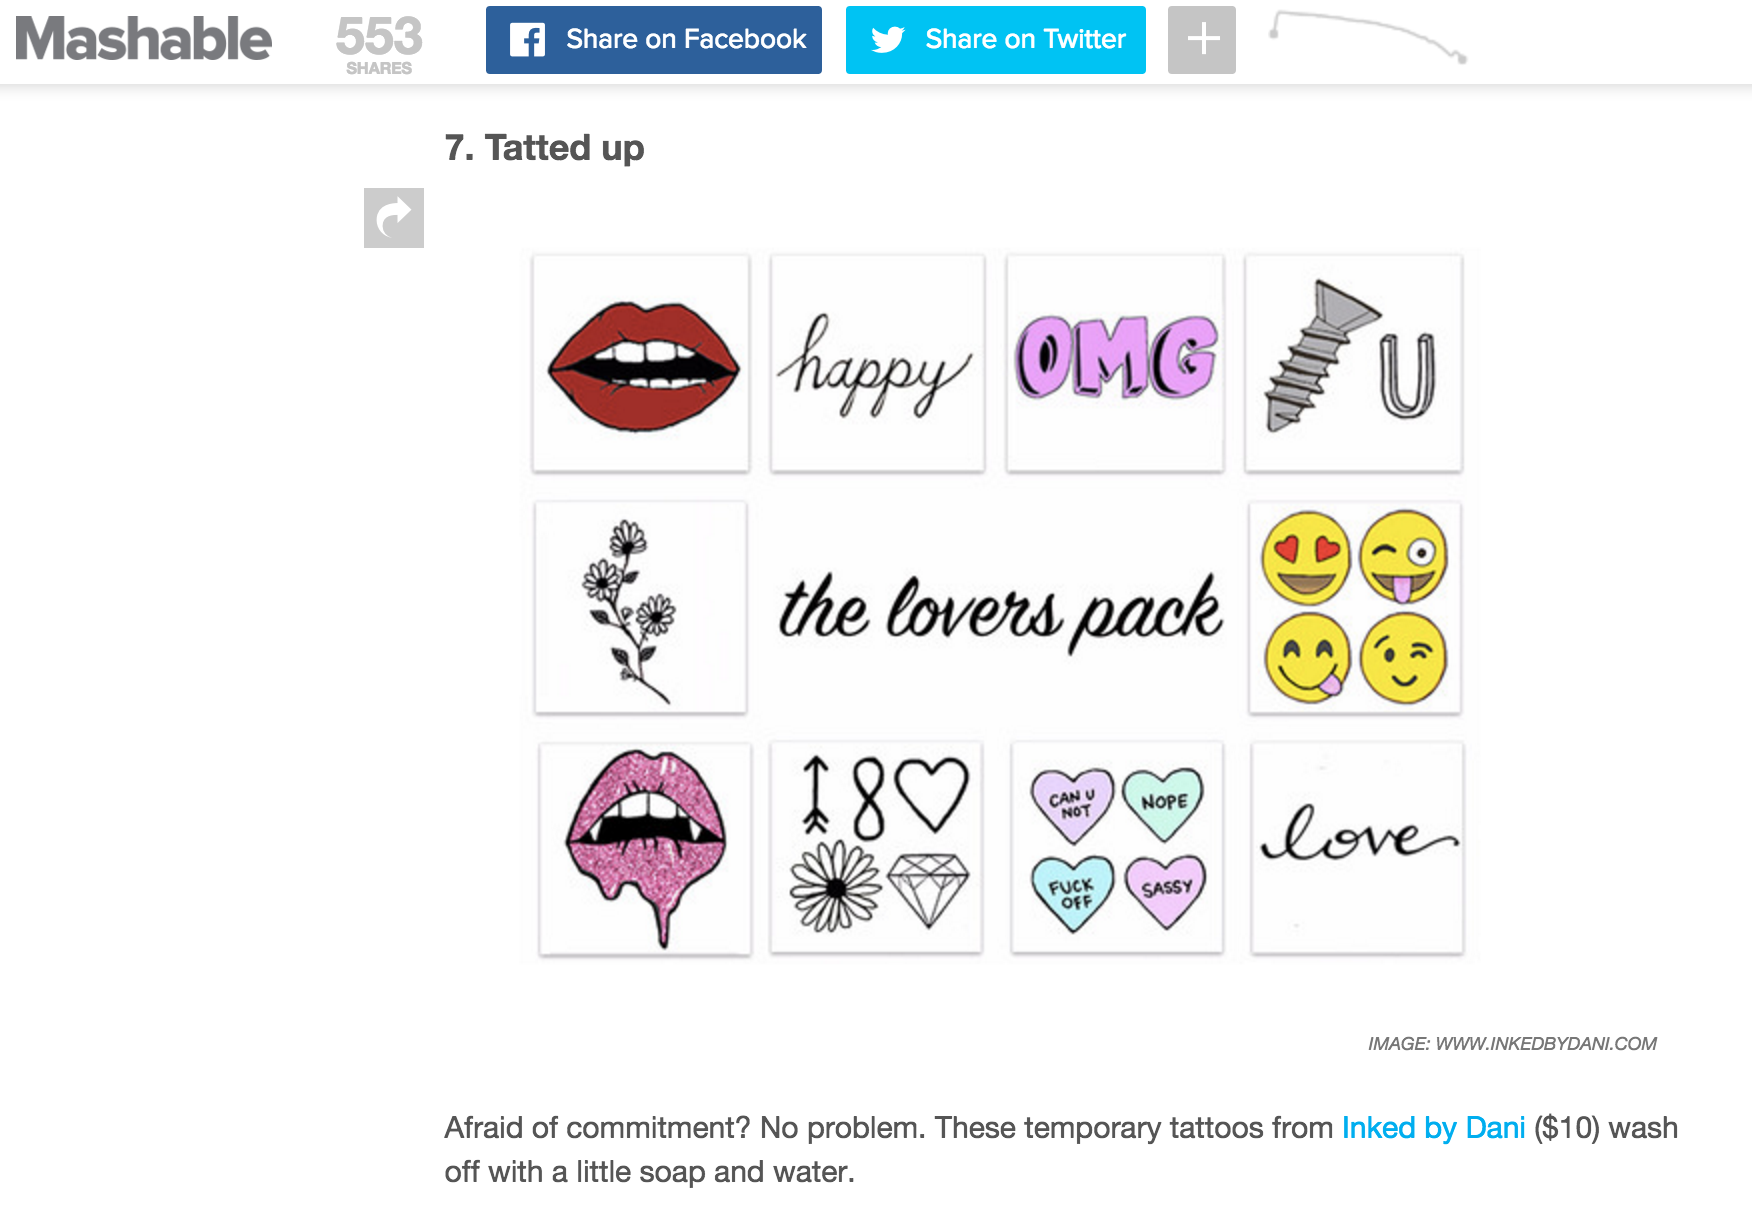 Mashable's Creative Valentine's Day Gifts